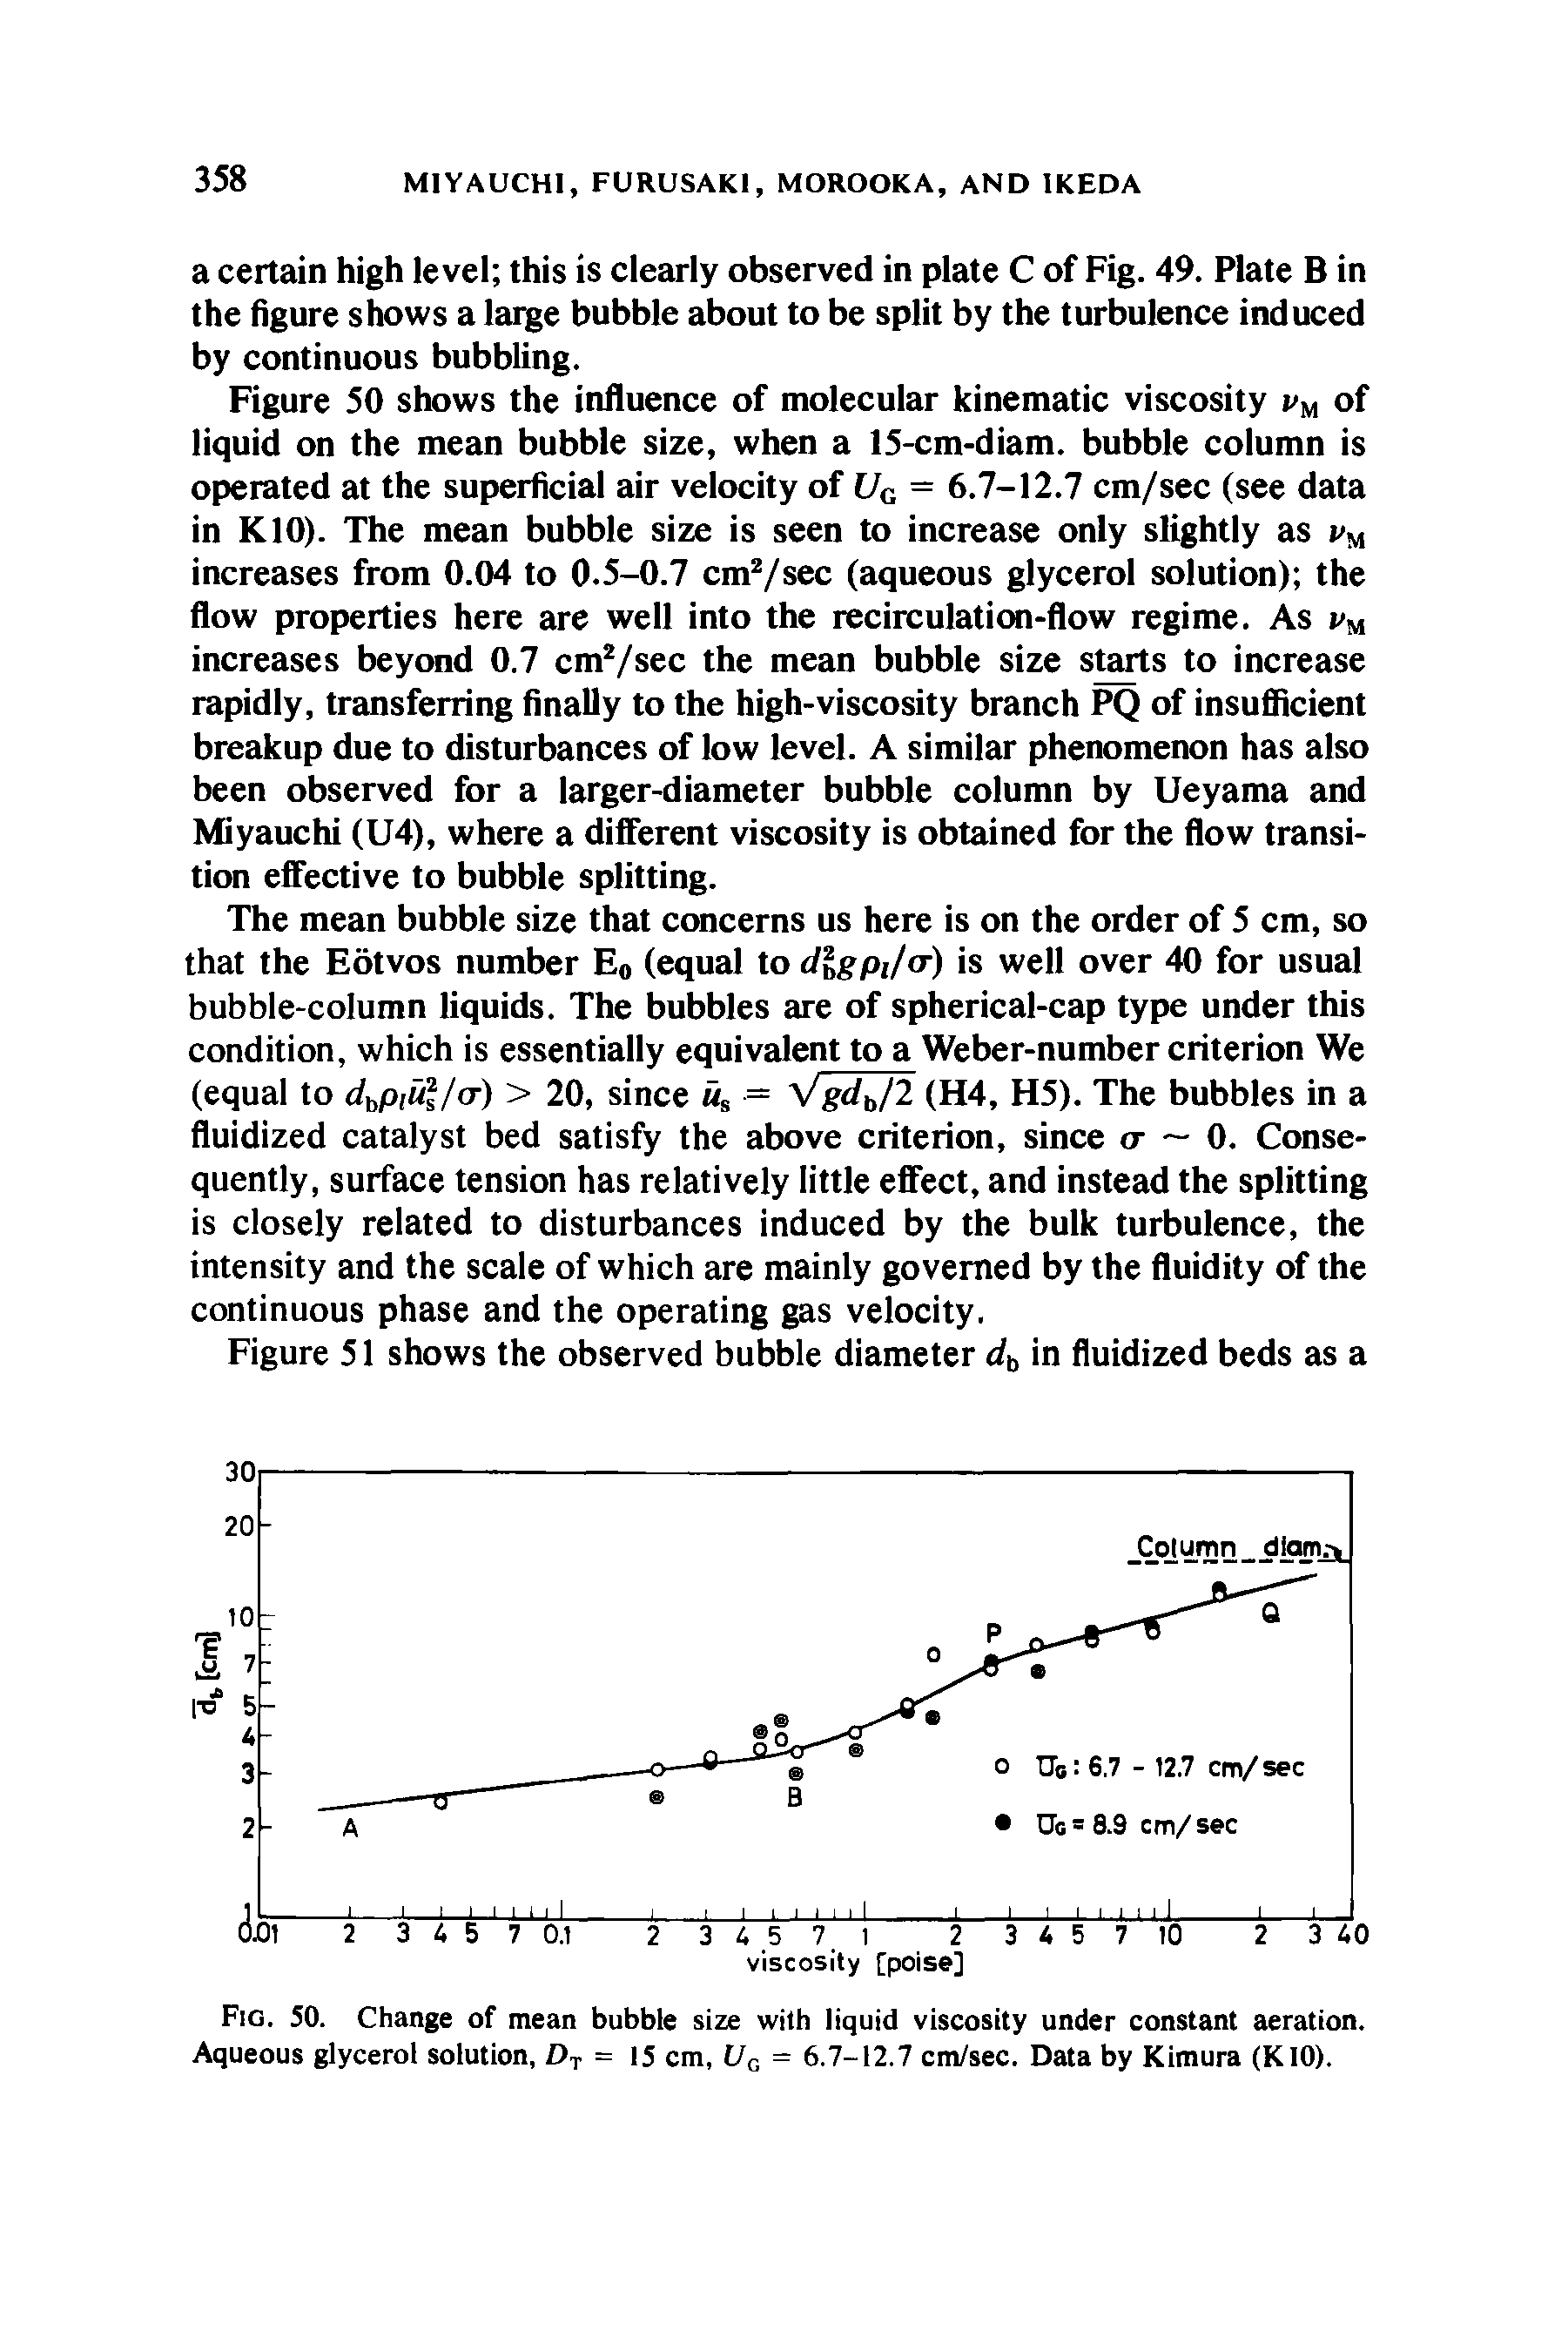 Fig. 50. Change of mean bubble size with liquid viscosity under constant aeration. Aqueous glycerol solution, Dj = 15 cm, l/c - 6.7-12.7 cm/sec. Data by Kimura (KIO).